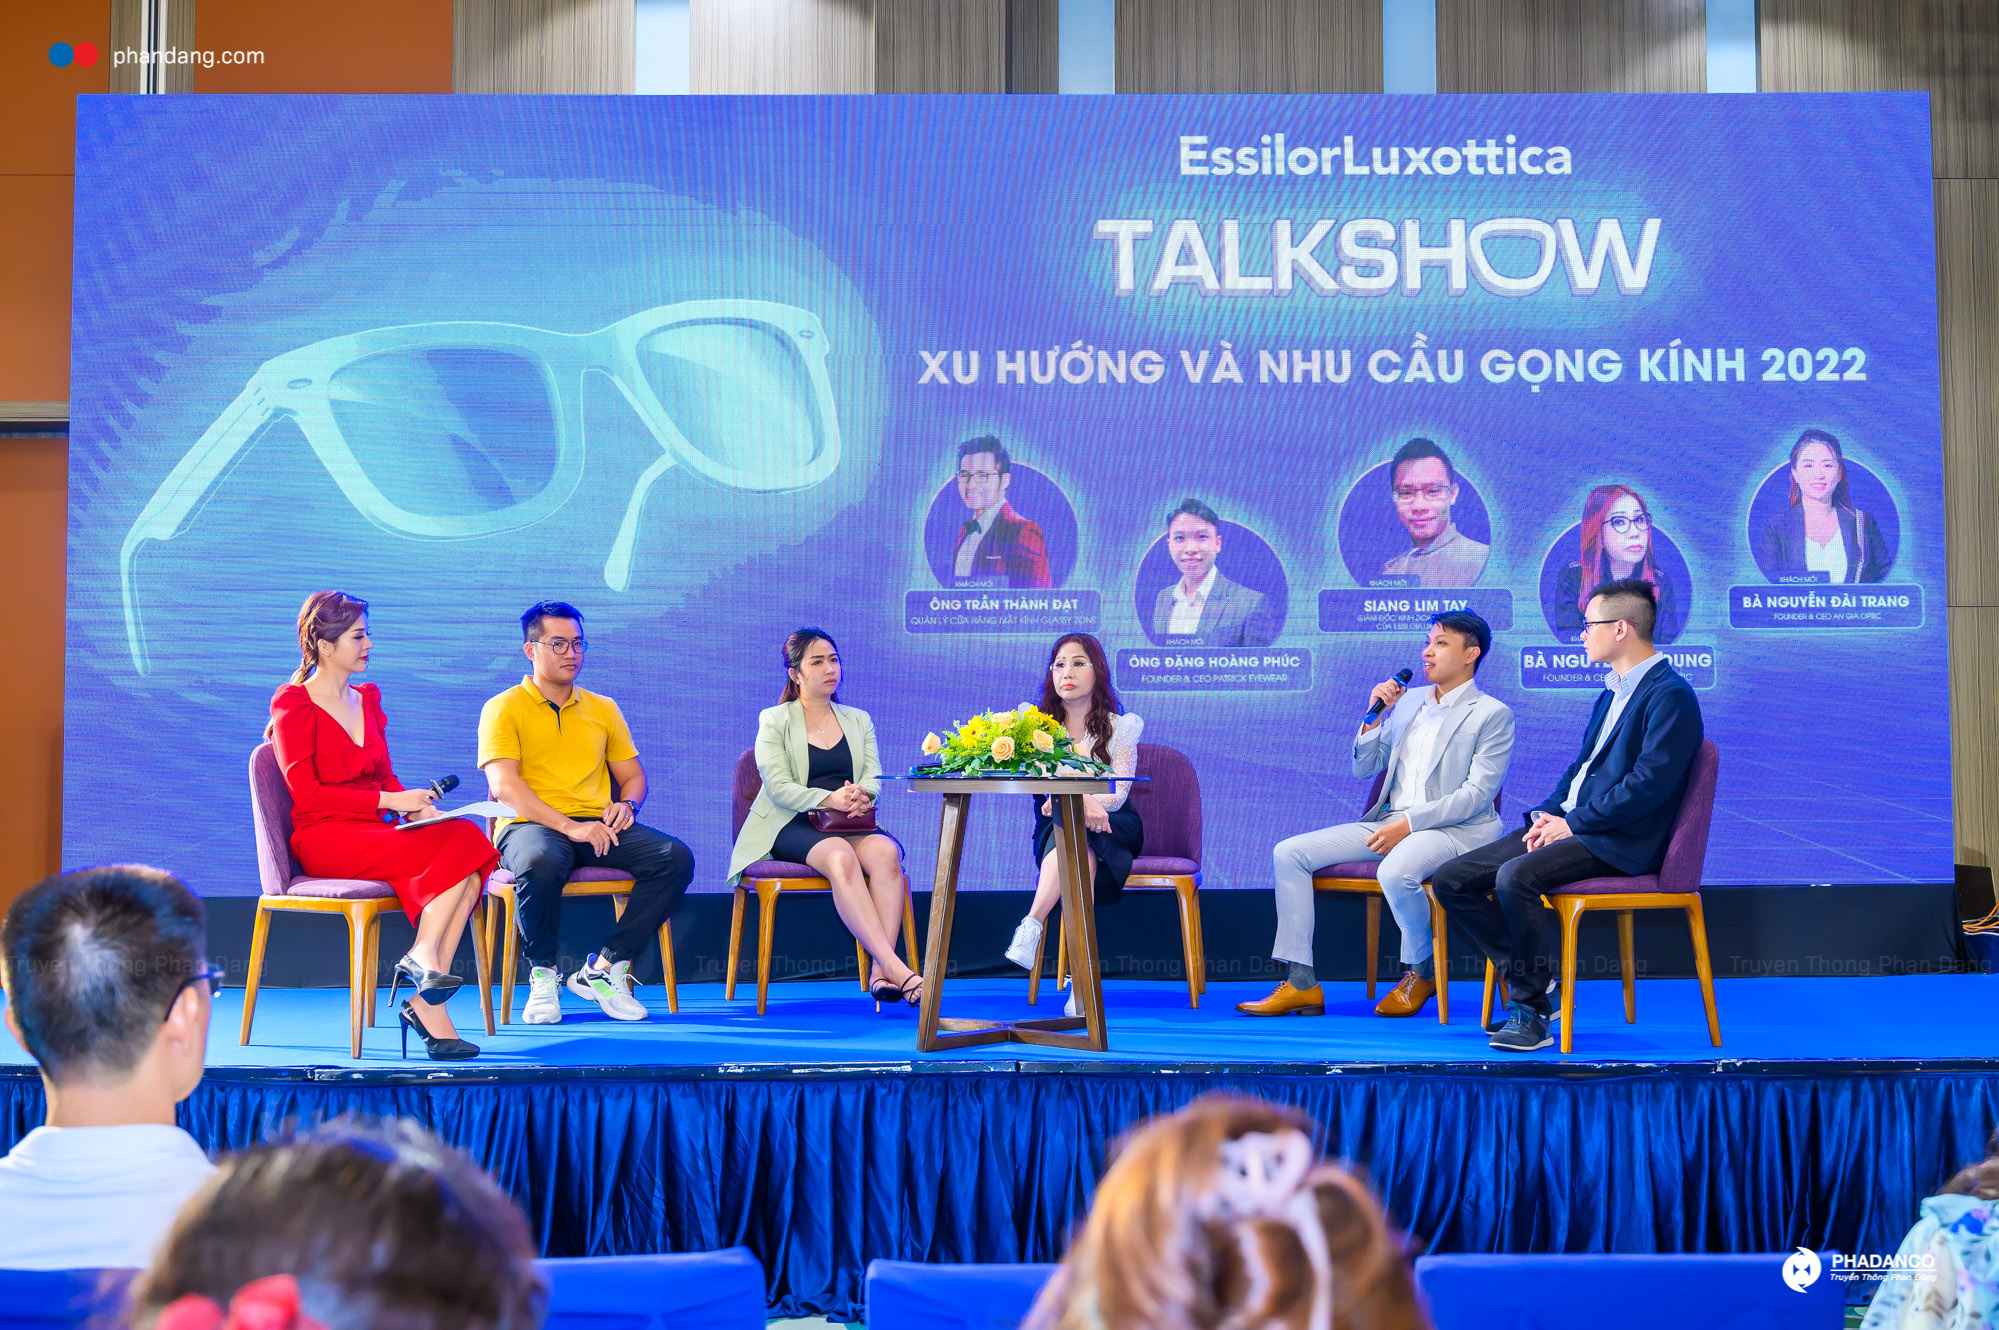 Tổ chức Talkshow tại lễ ra mắt thương hiệu mới Essilorluxottica